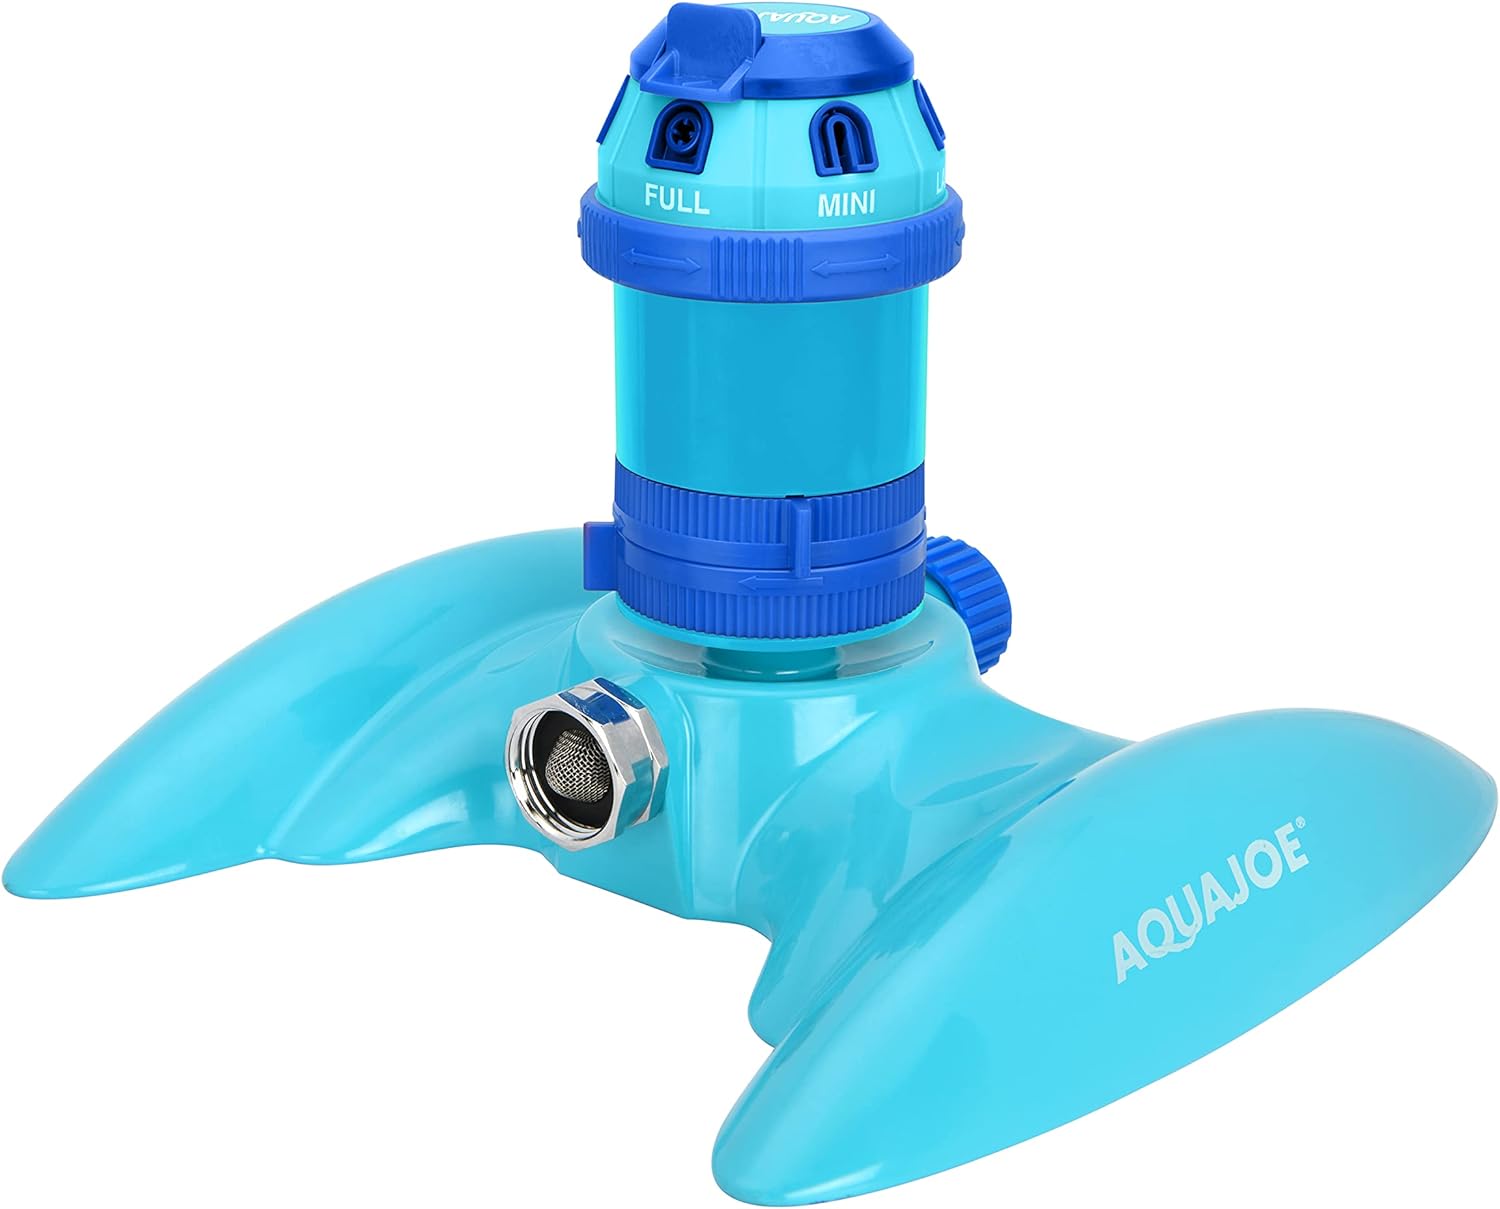 Aqua Joe AJ-MSSBM6 6-Pattern Turbo Drive 360 Degree Sprinkler, Customizable Coverage, 6 Spray Patterns